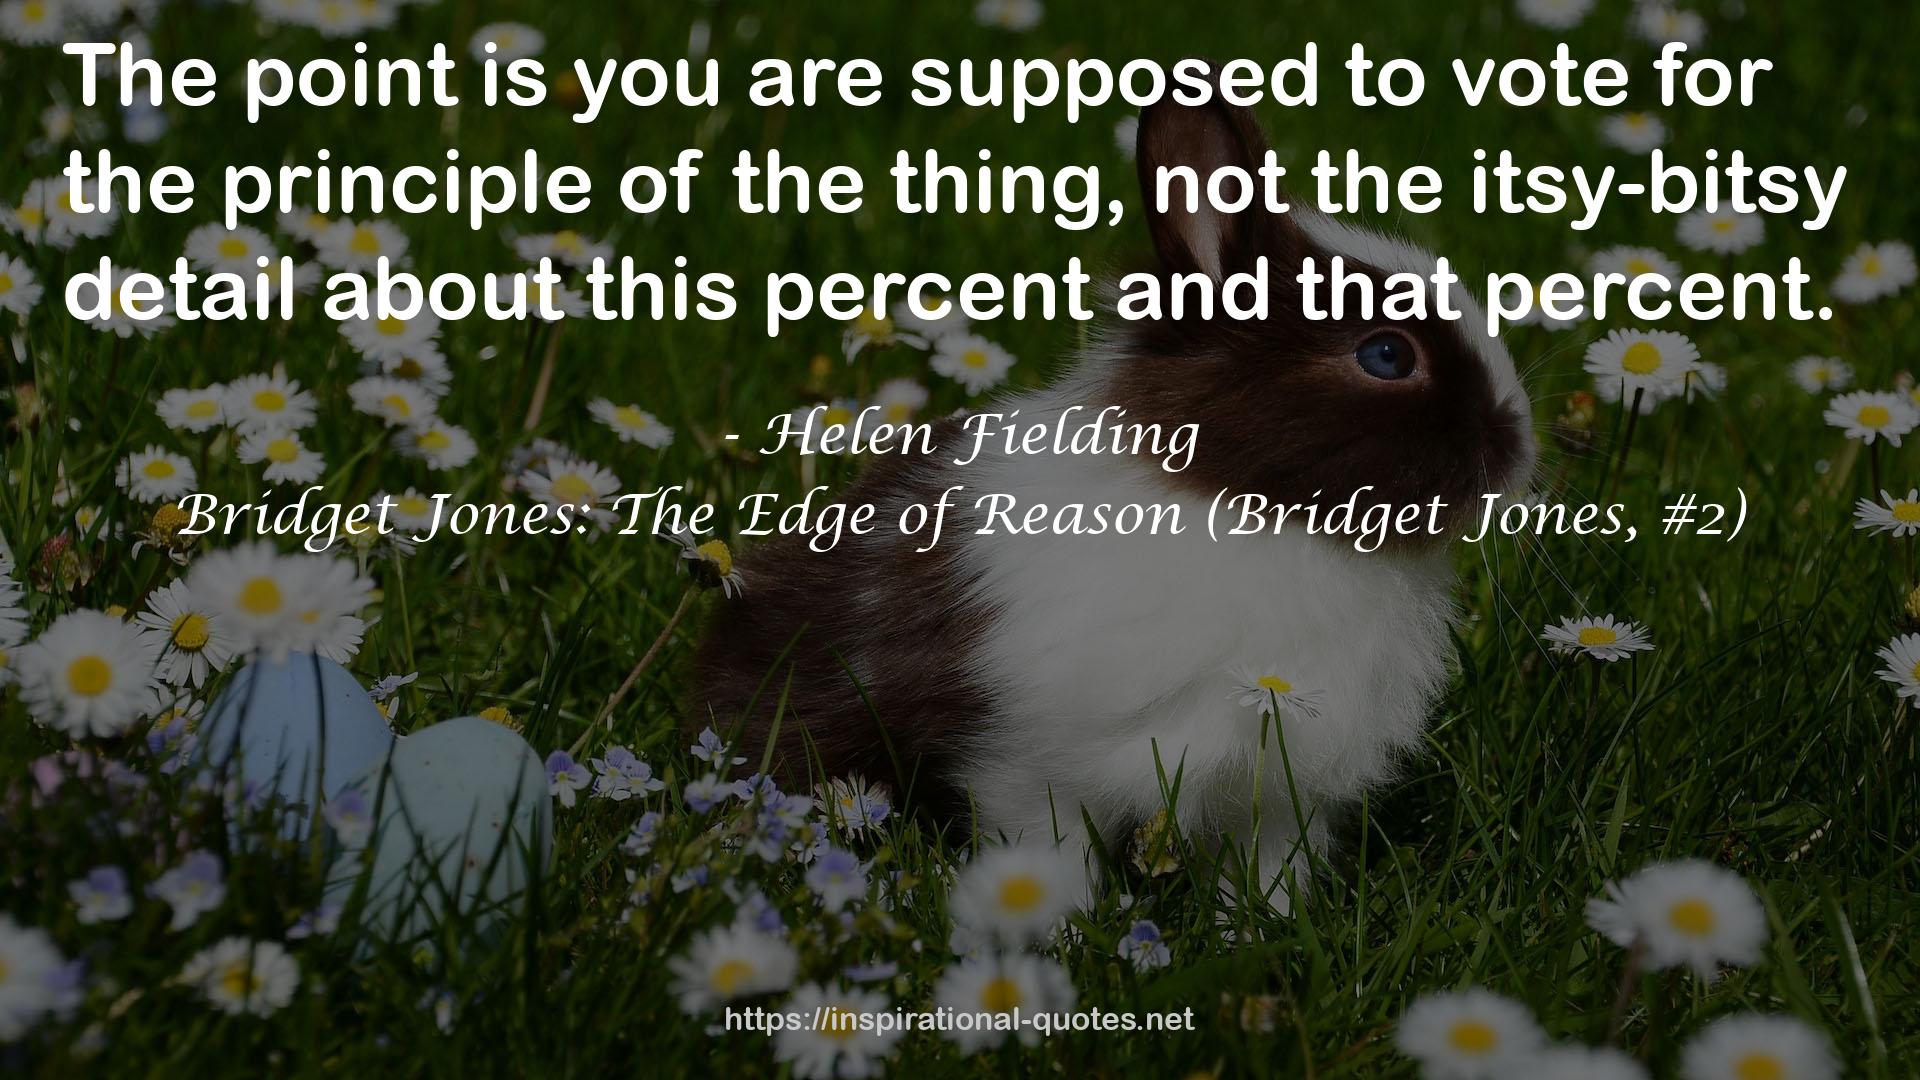 Bridget Jones: The Edge of Reason (Bridget Jones, #2) QUOTES